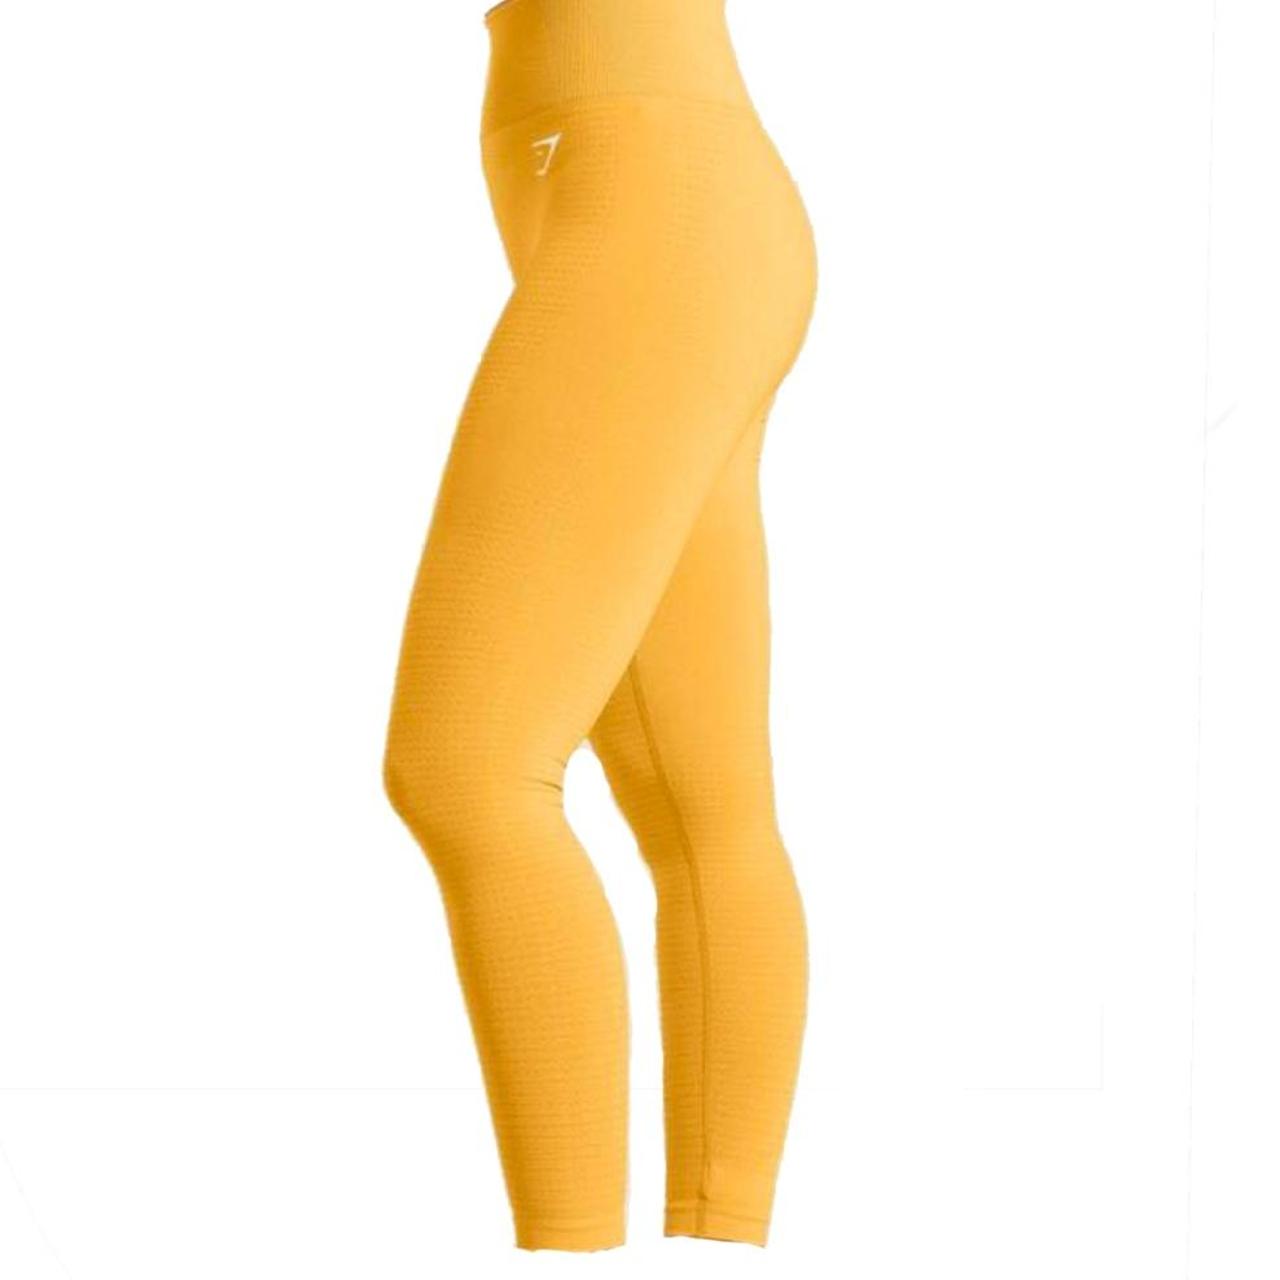 Gym shark vital leggings in yellow marl. Brand new - Depop